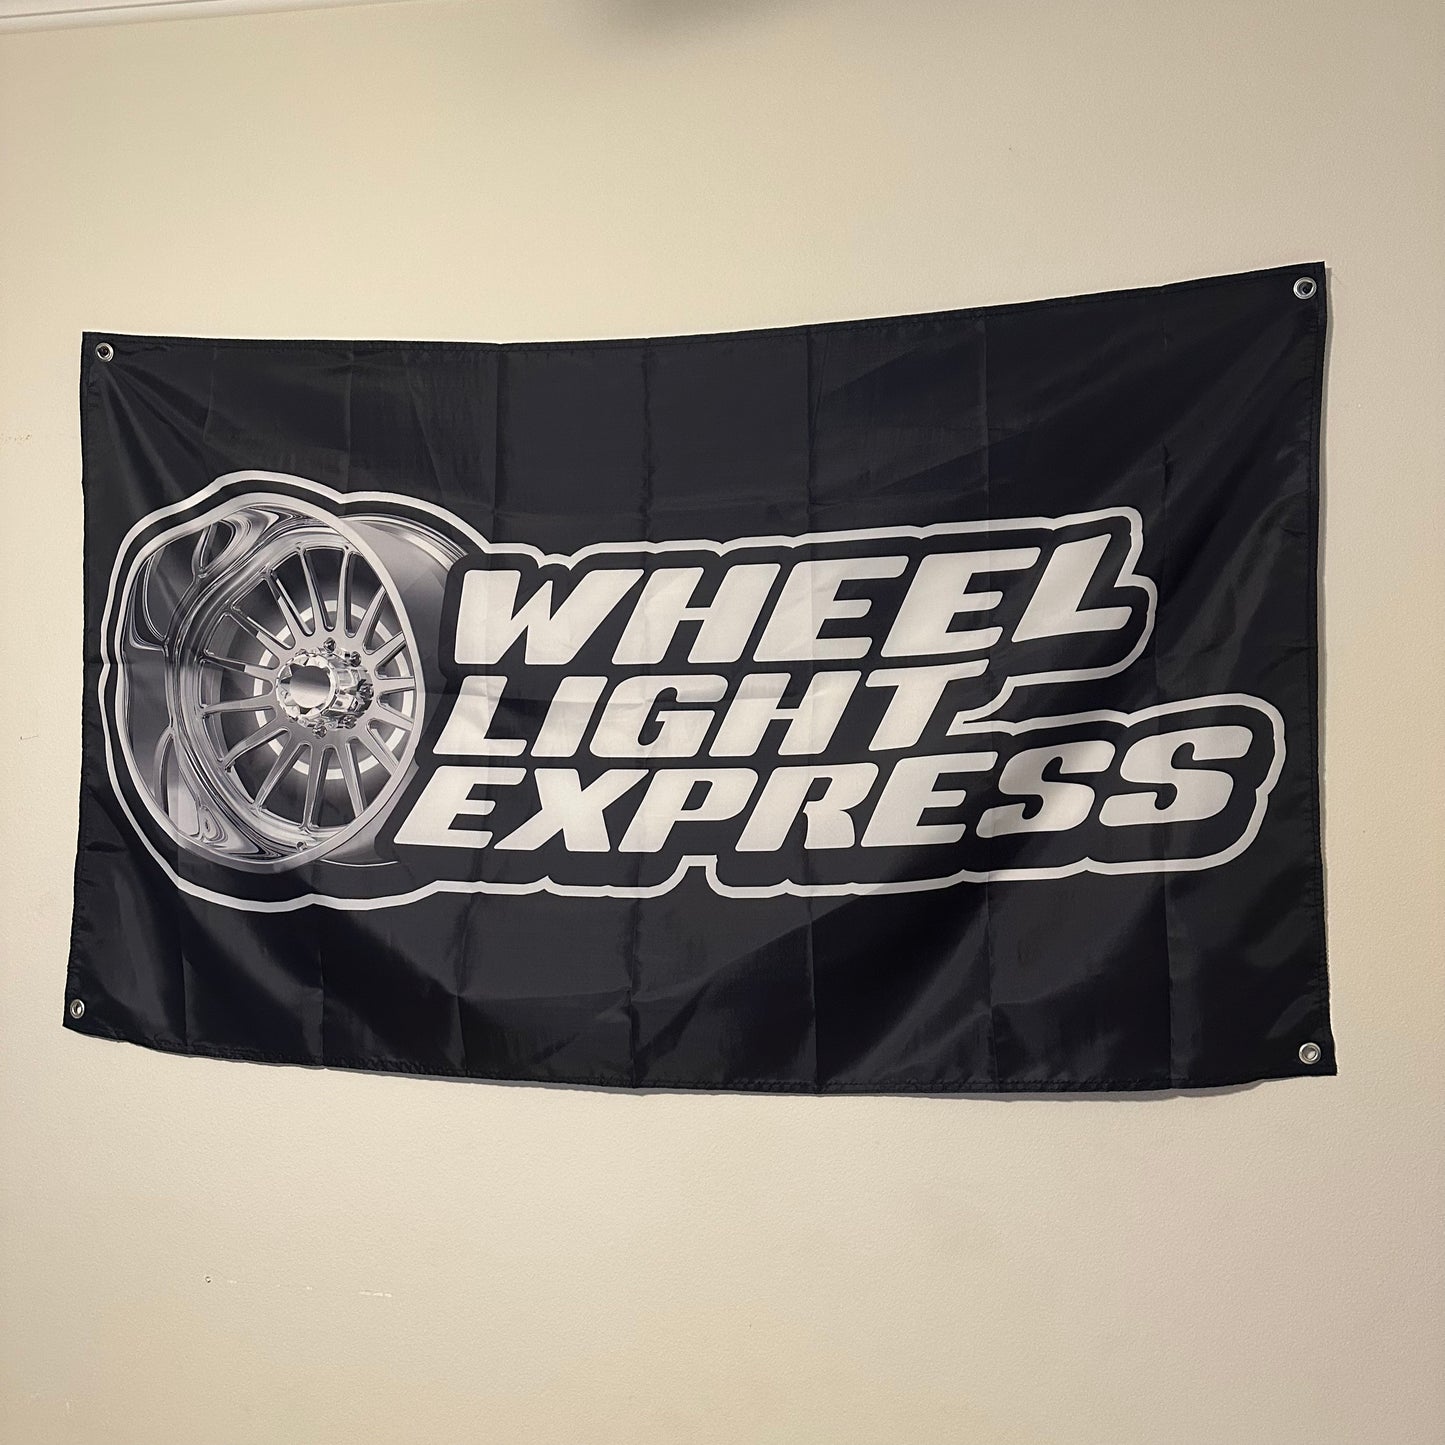 Wheel Light Express Flag